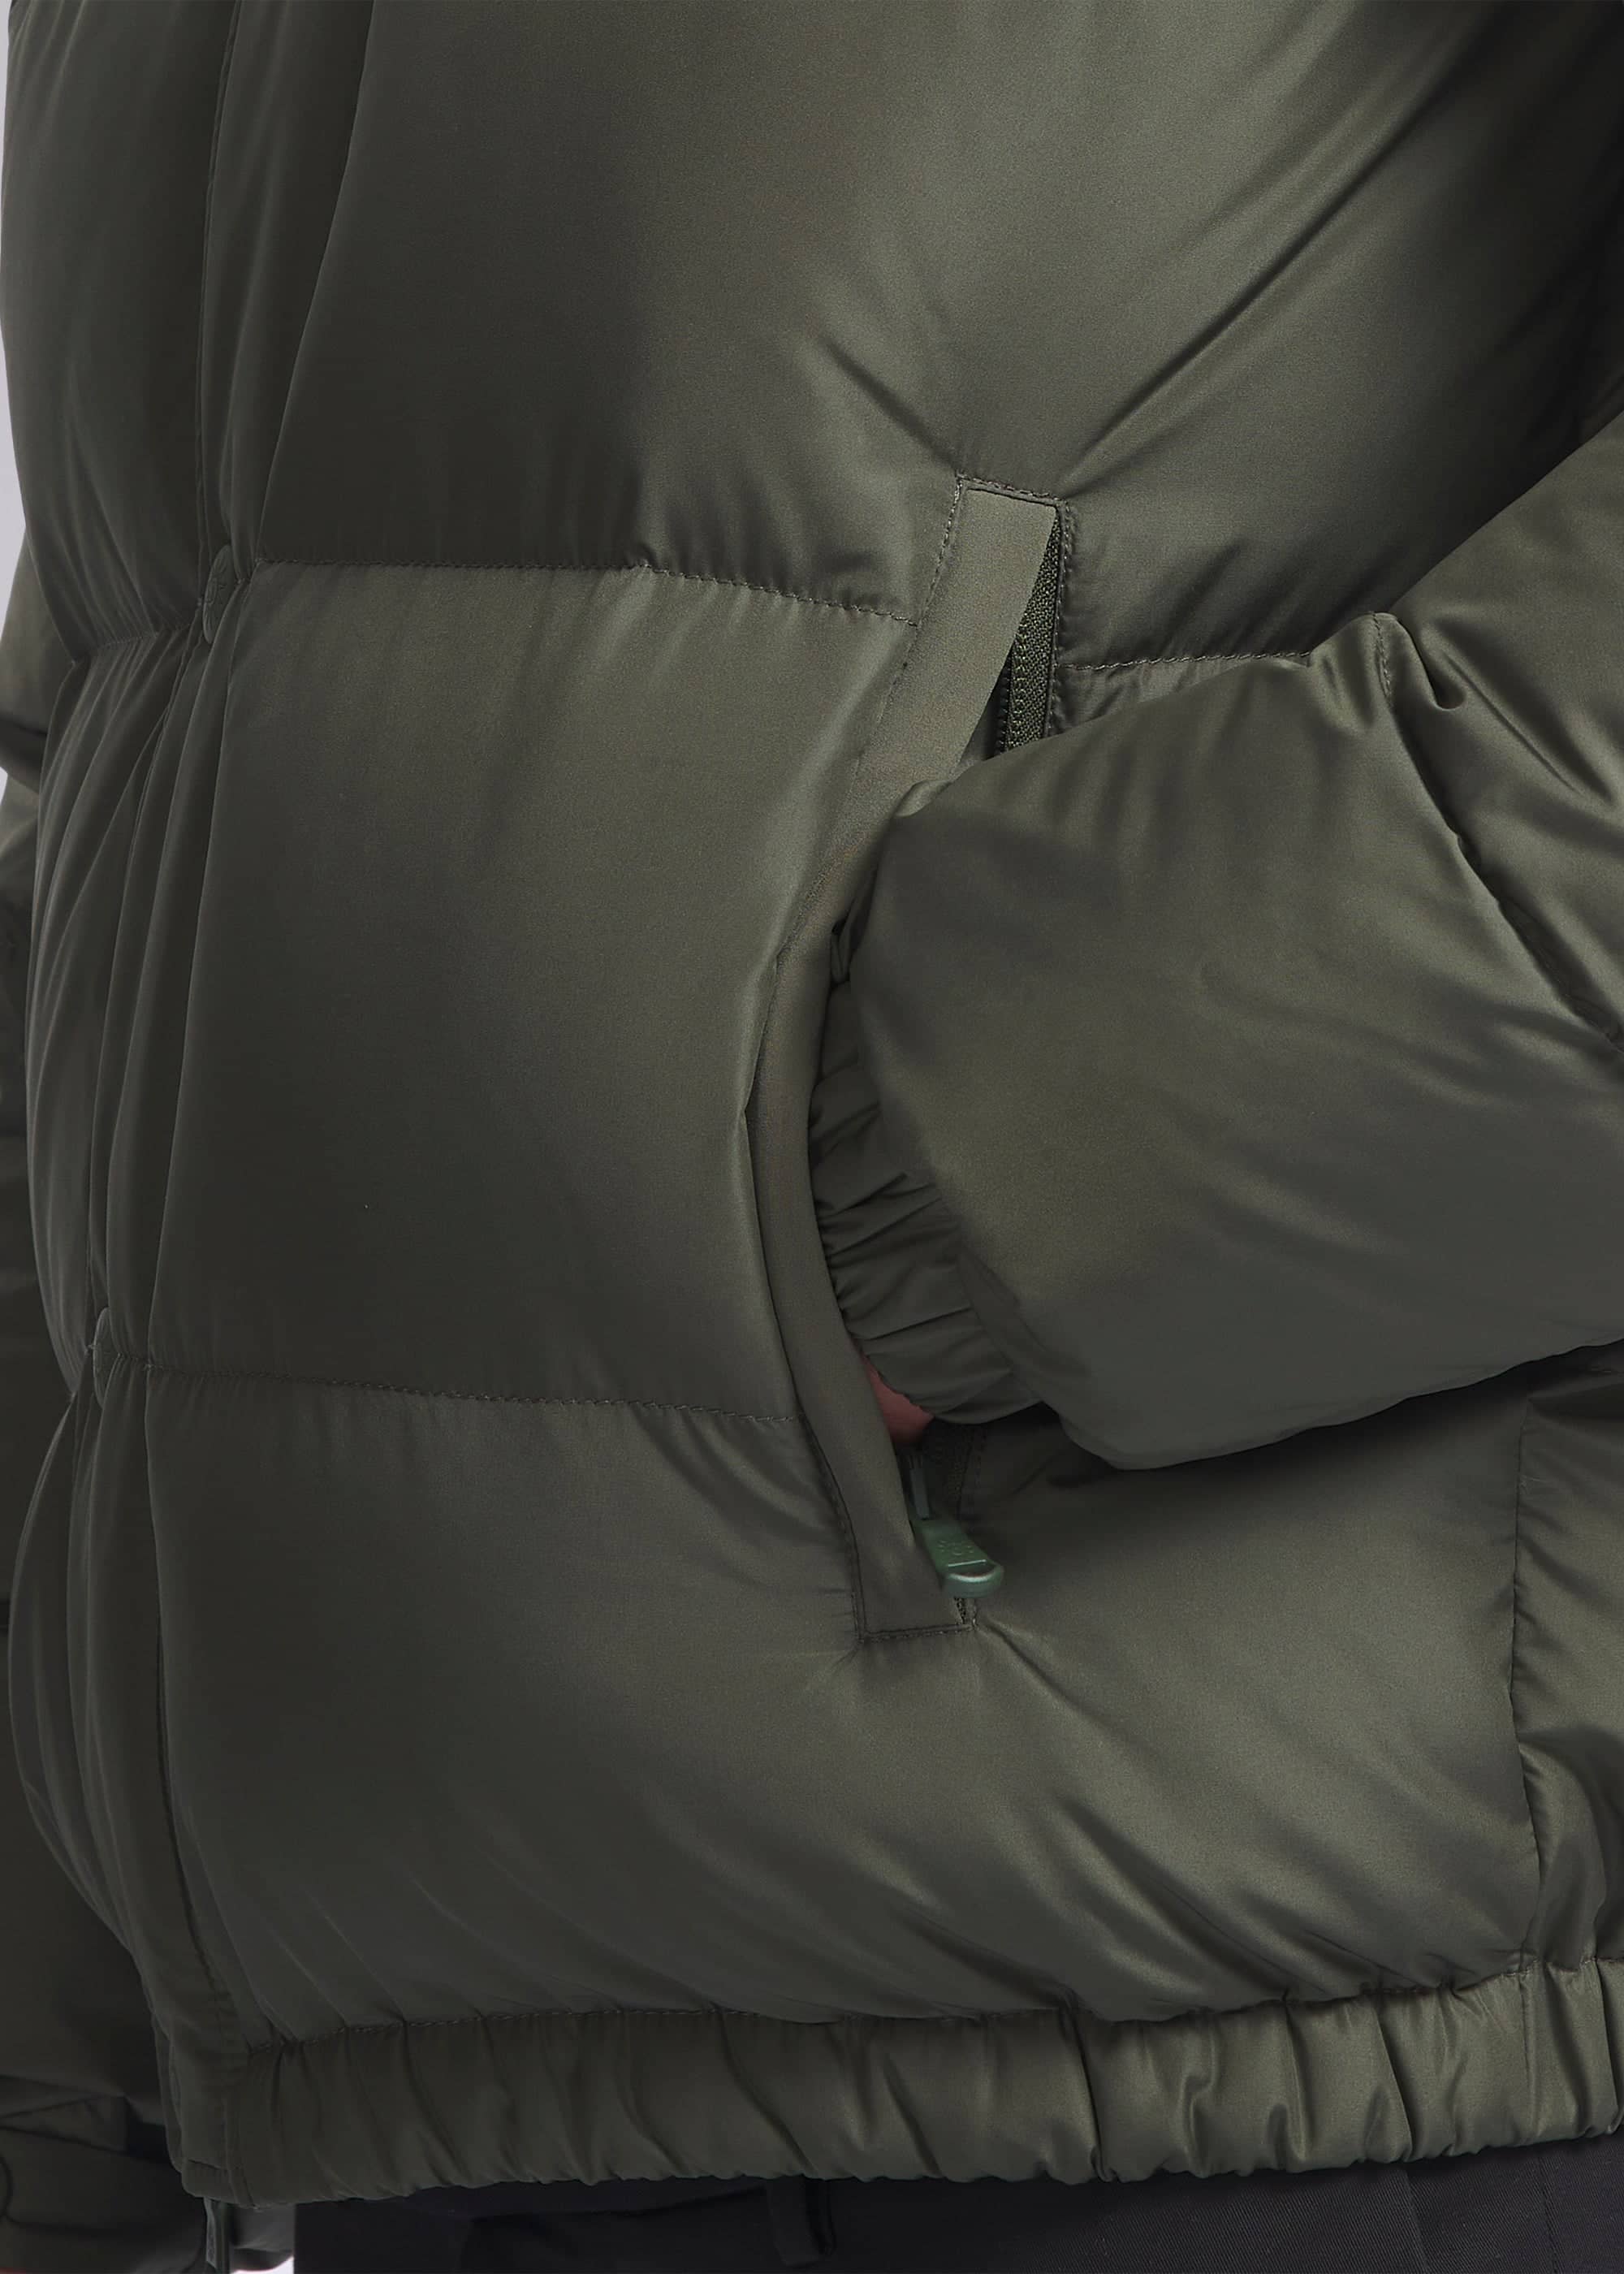 Sandbanks Peninsula Puffer Jacket - Khaki